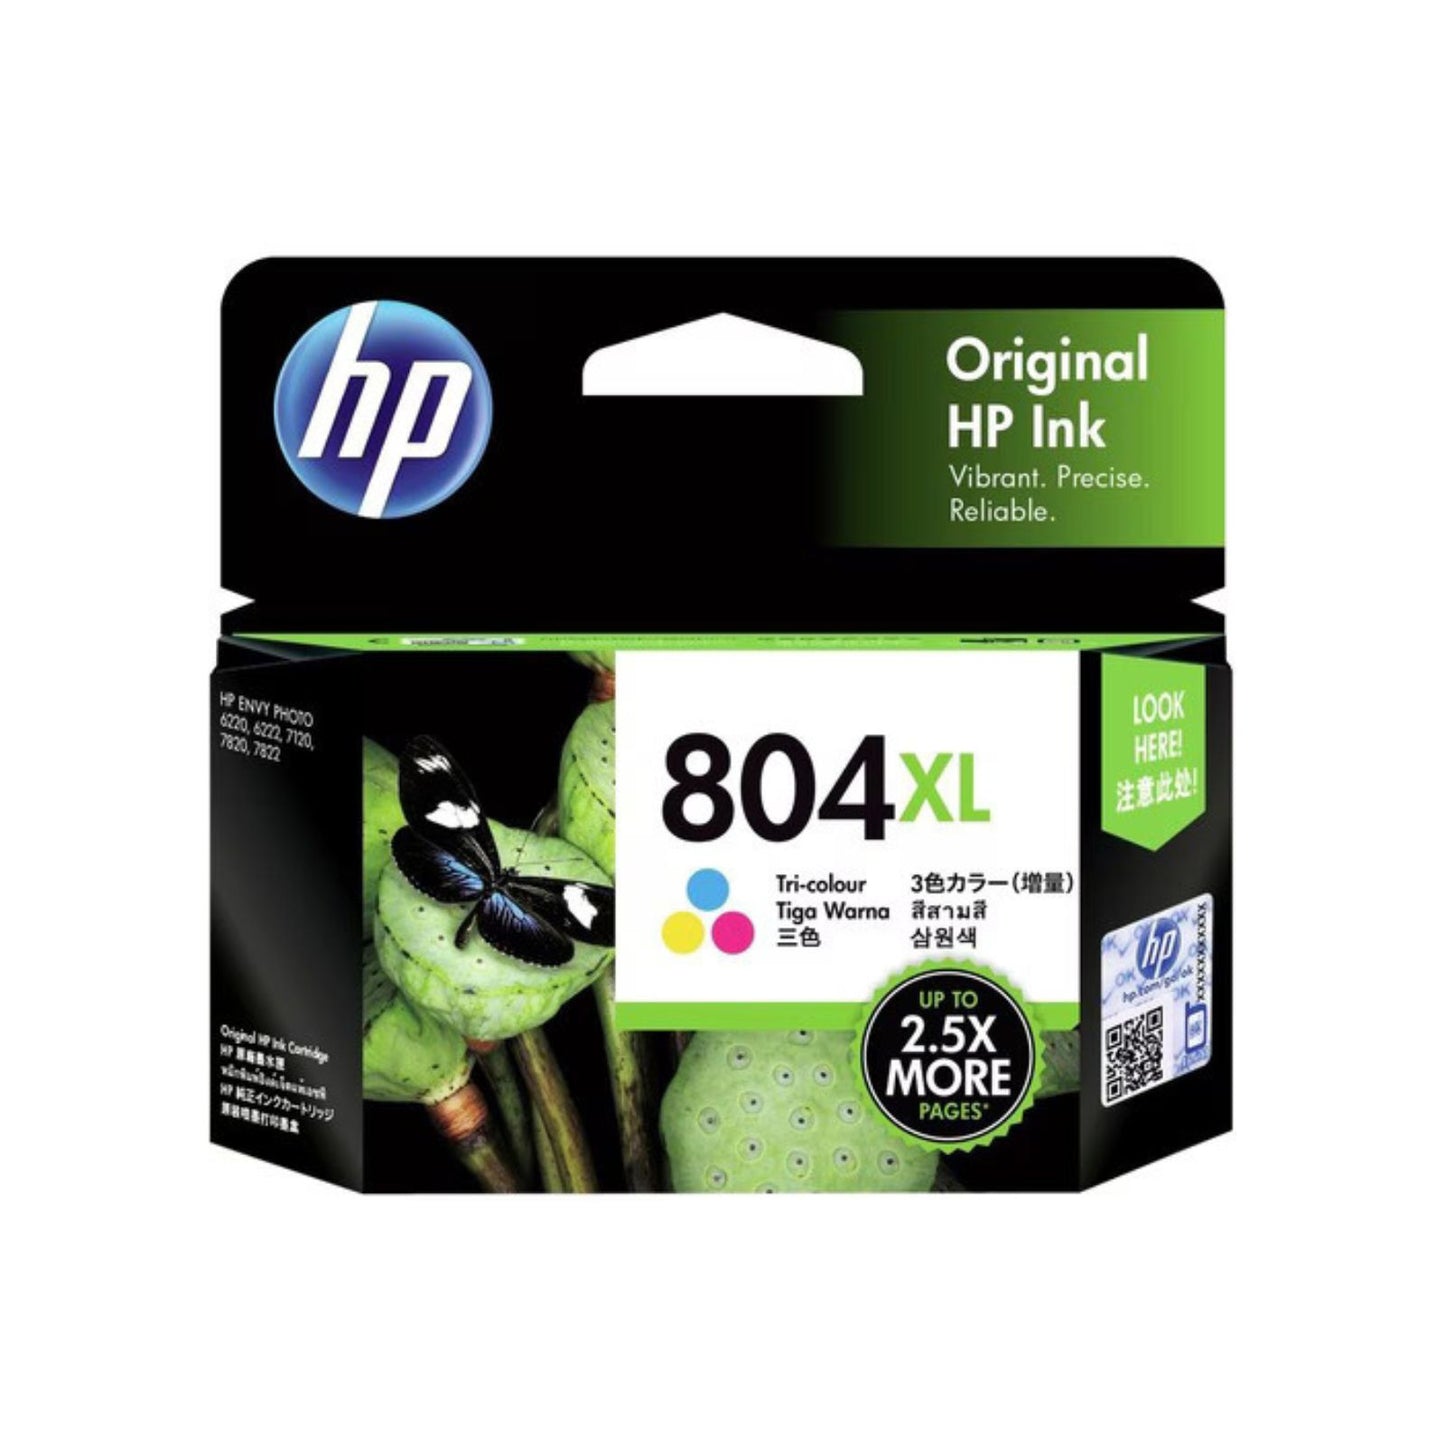 HP 804XL High Yield Tri-color Original Ink Cartridge